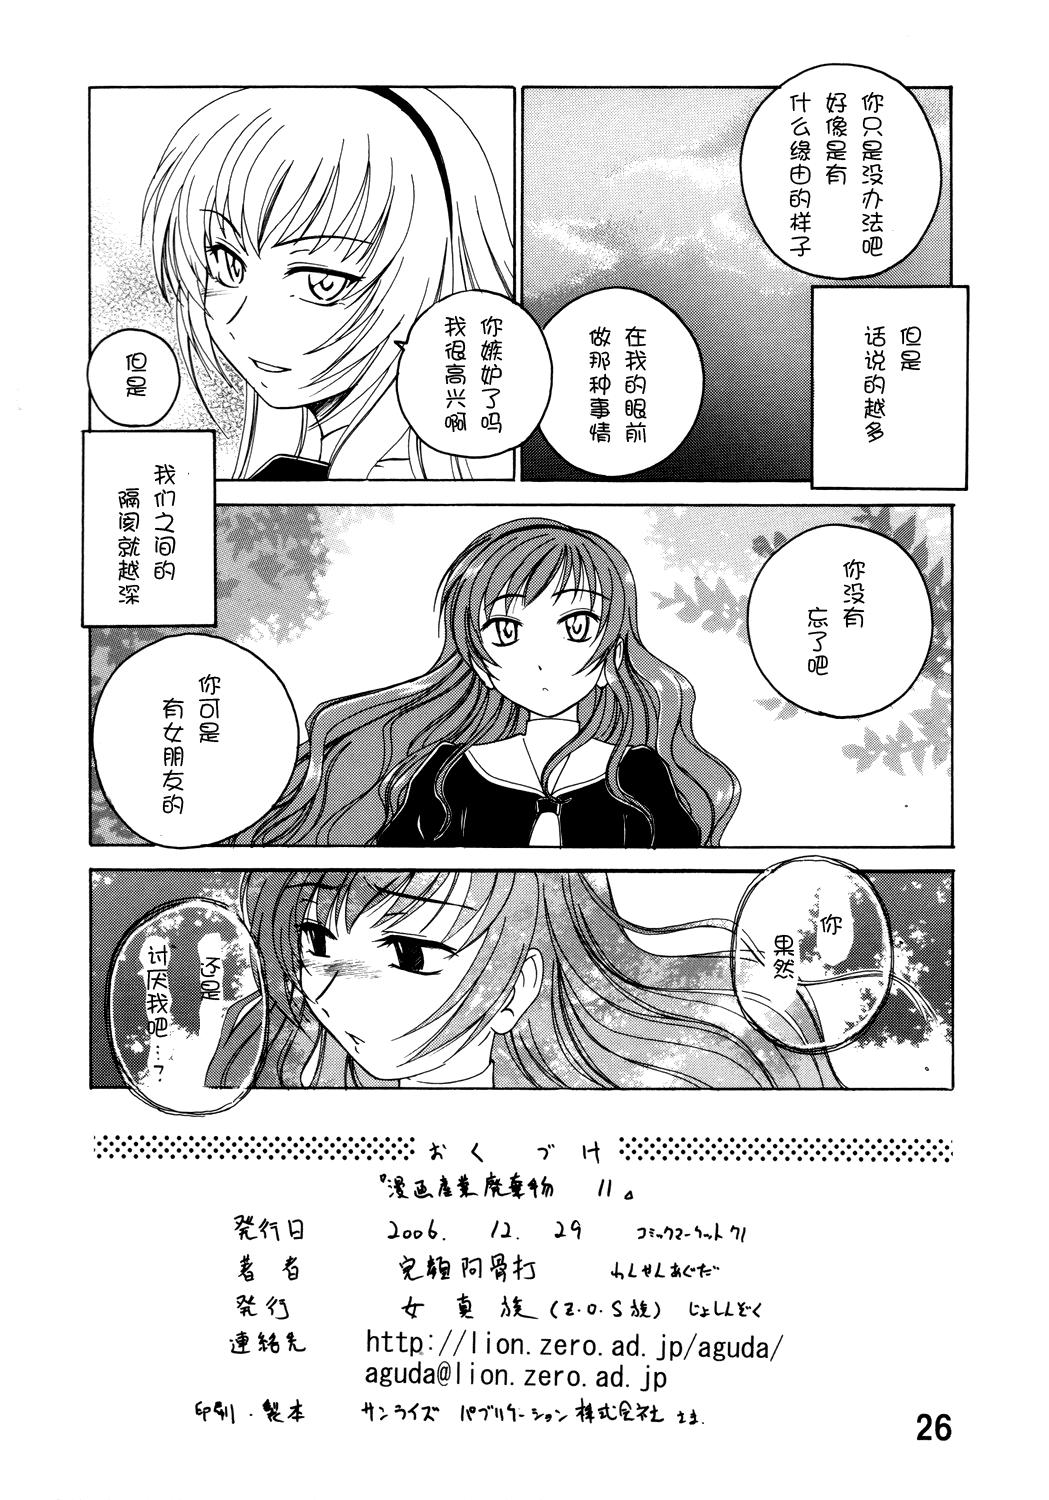 Hardcore Rough Sex Manga Sangyou Haikibutsu 11 - Comic Industrial Wastes 11 - Princess princess Huge - Page 25